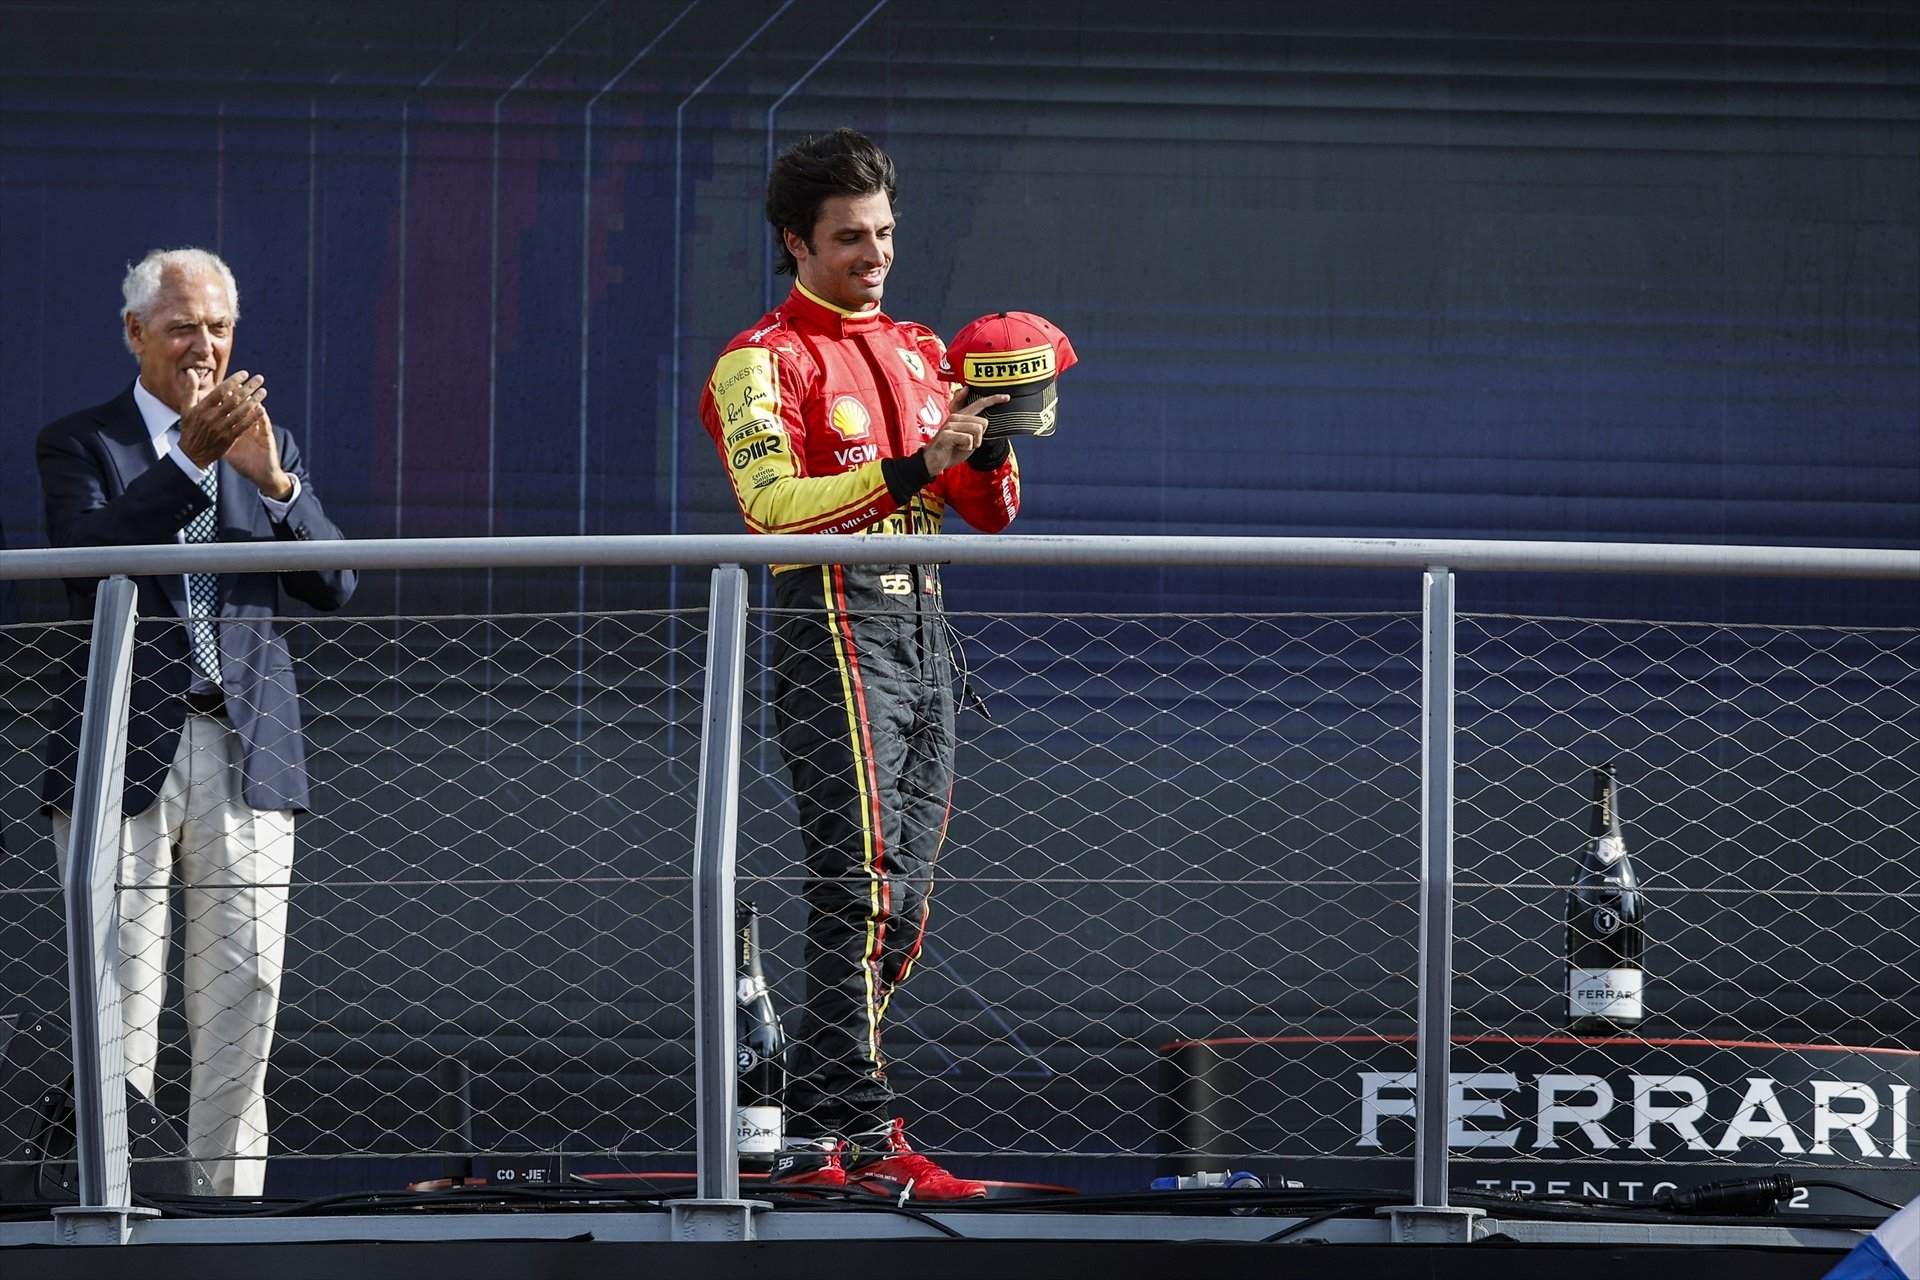 Carlos Sainz, ultimátum a Ferrari, 2 ofertas mejores, o renueva o se va